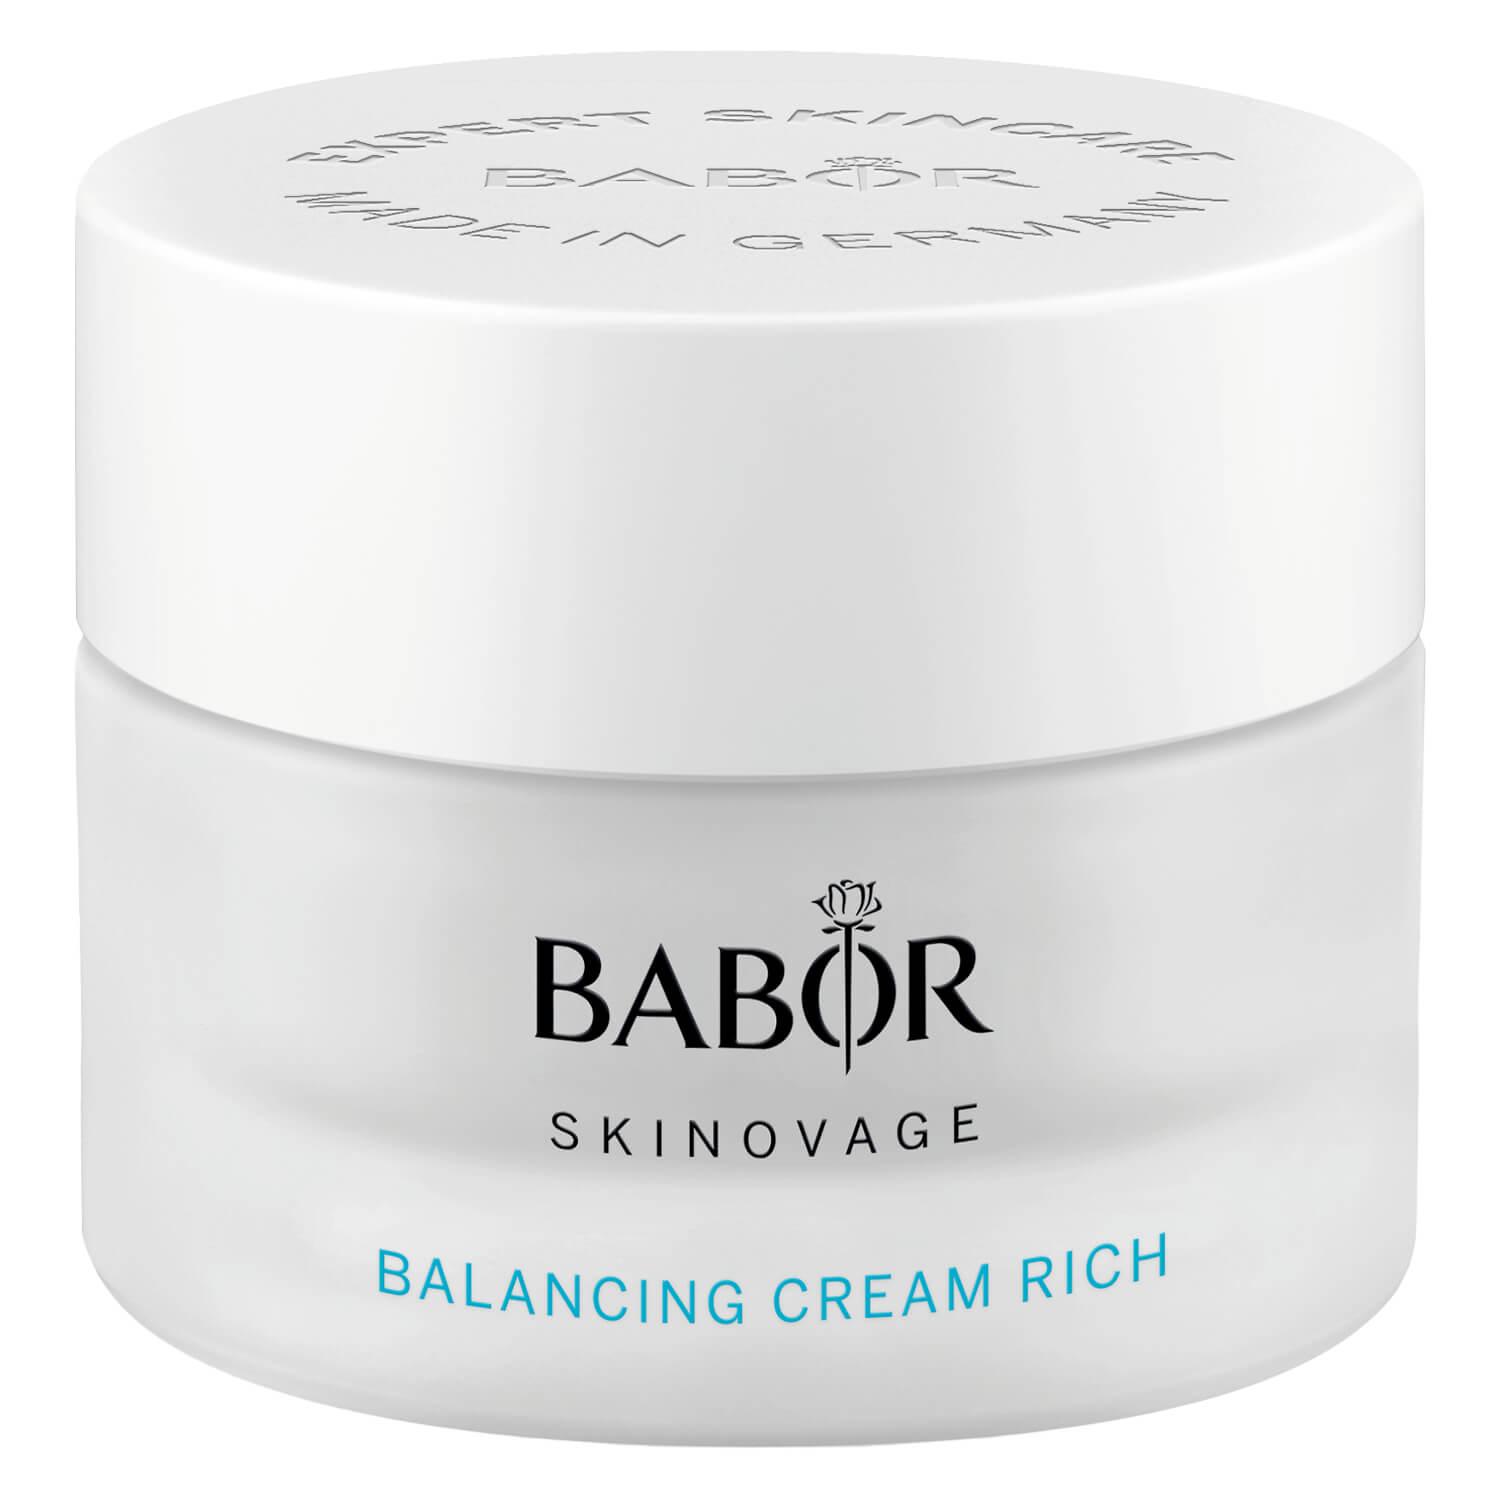 BABOR SKINOVAGE - Balancing Cream Rich Combination Skin